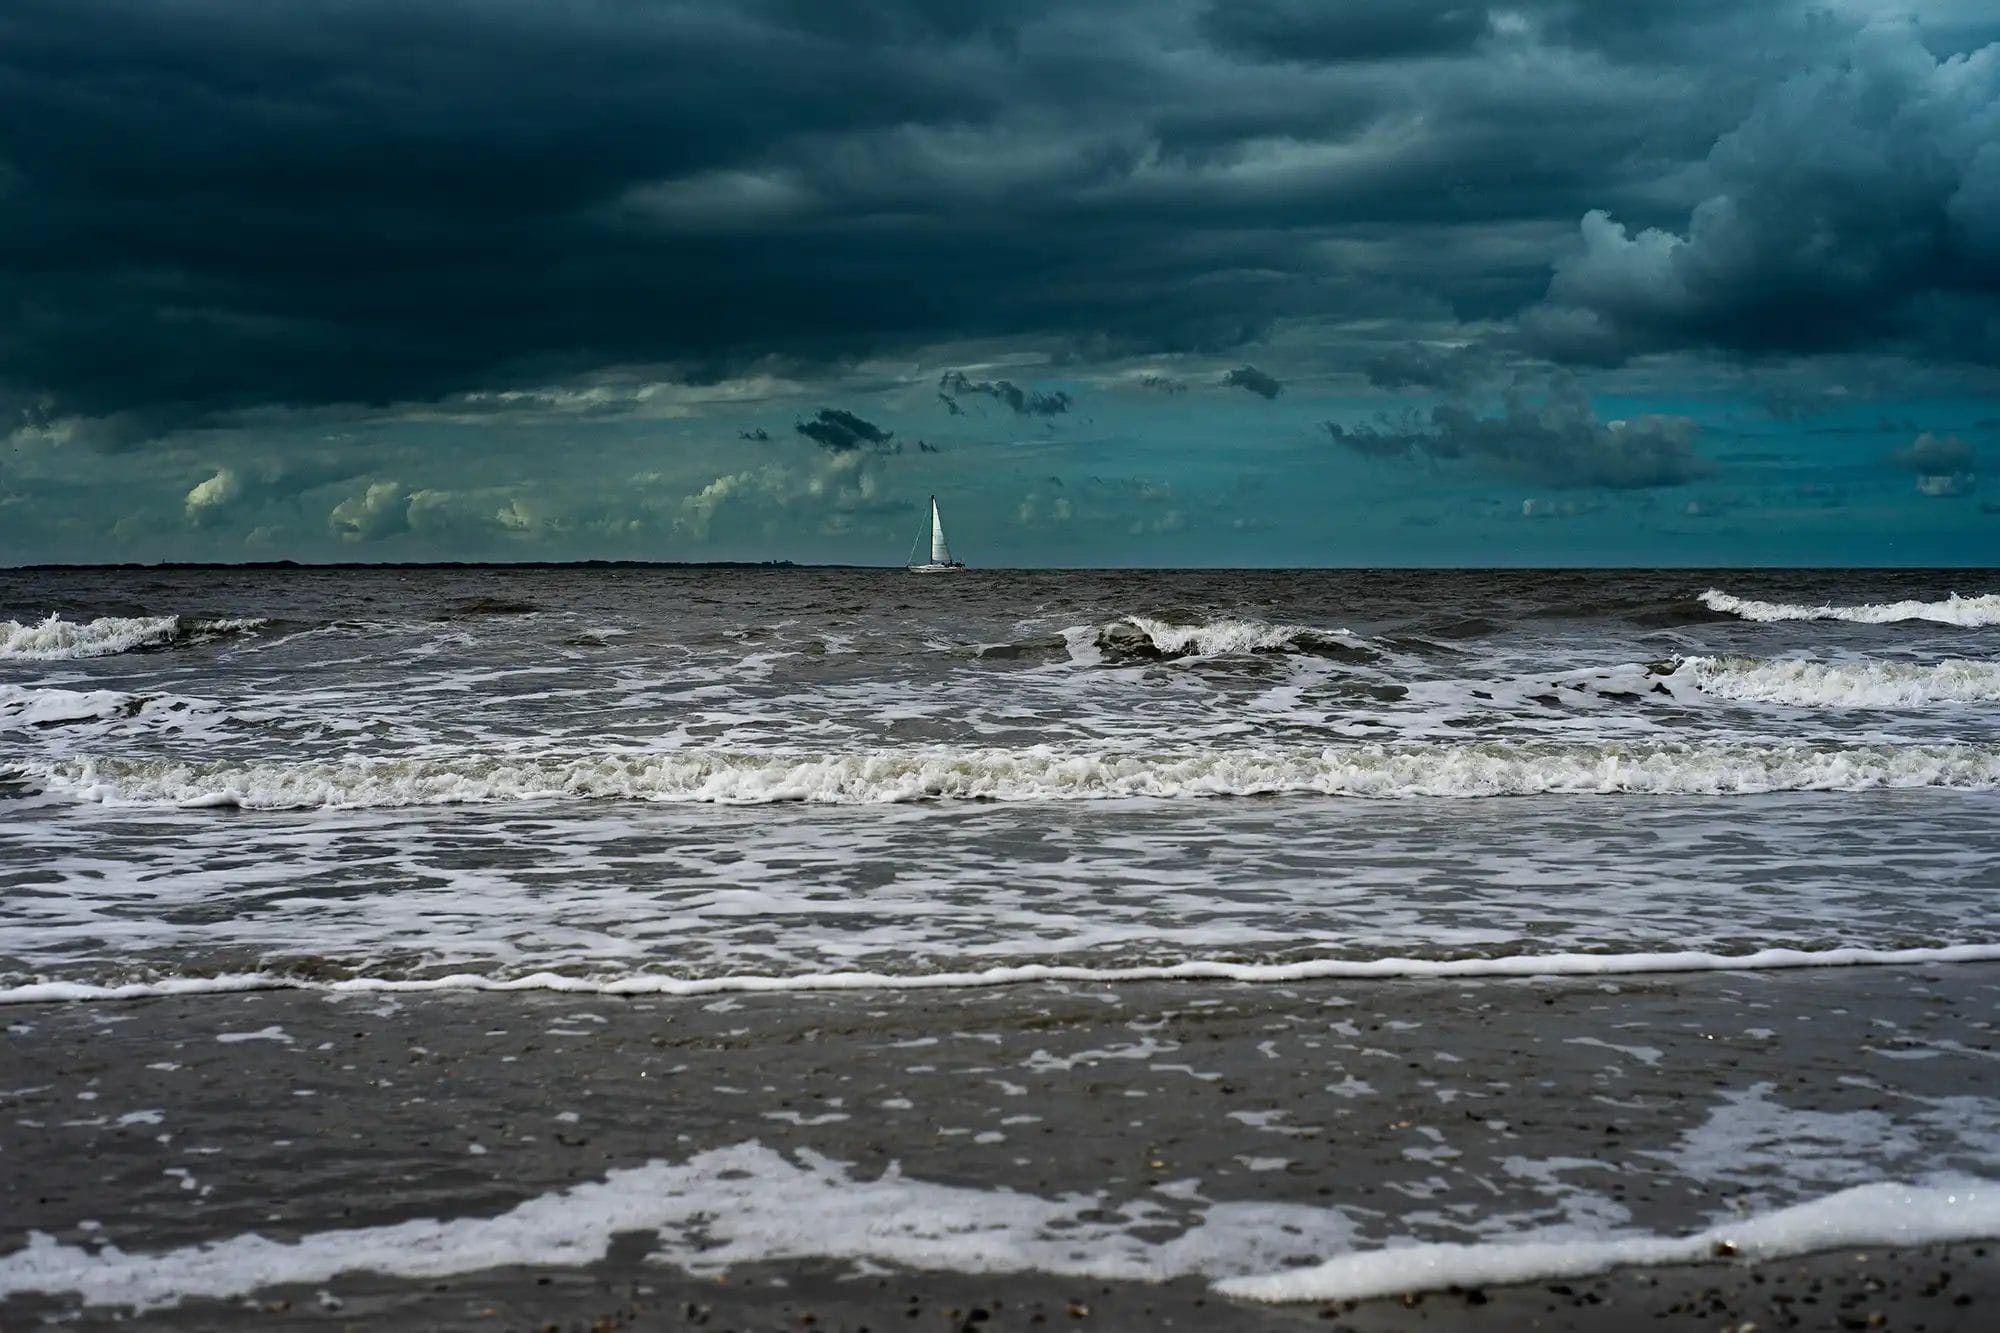 A stormy beach scene